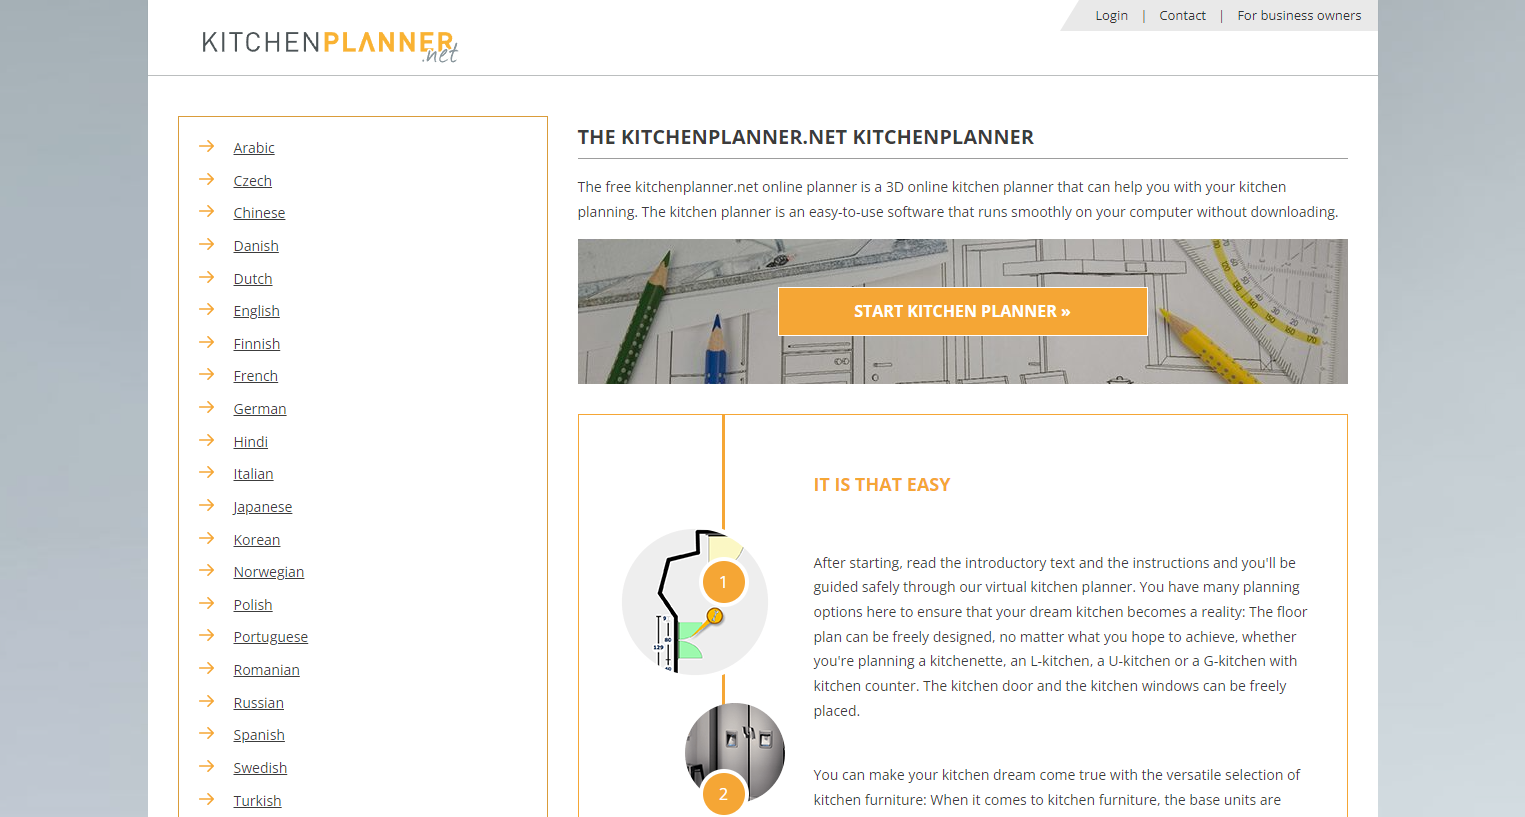 A Screenshot of Kitchenplanner.net's Landing Page